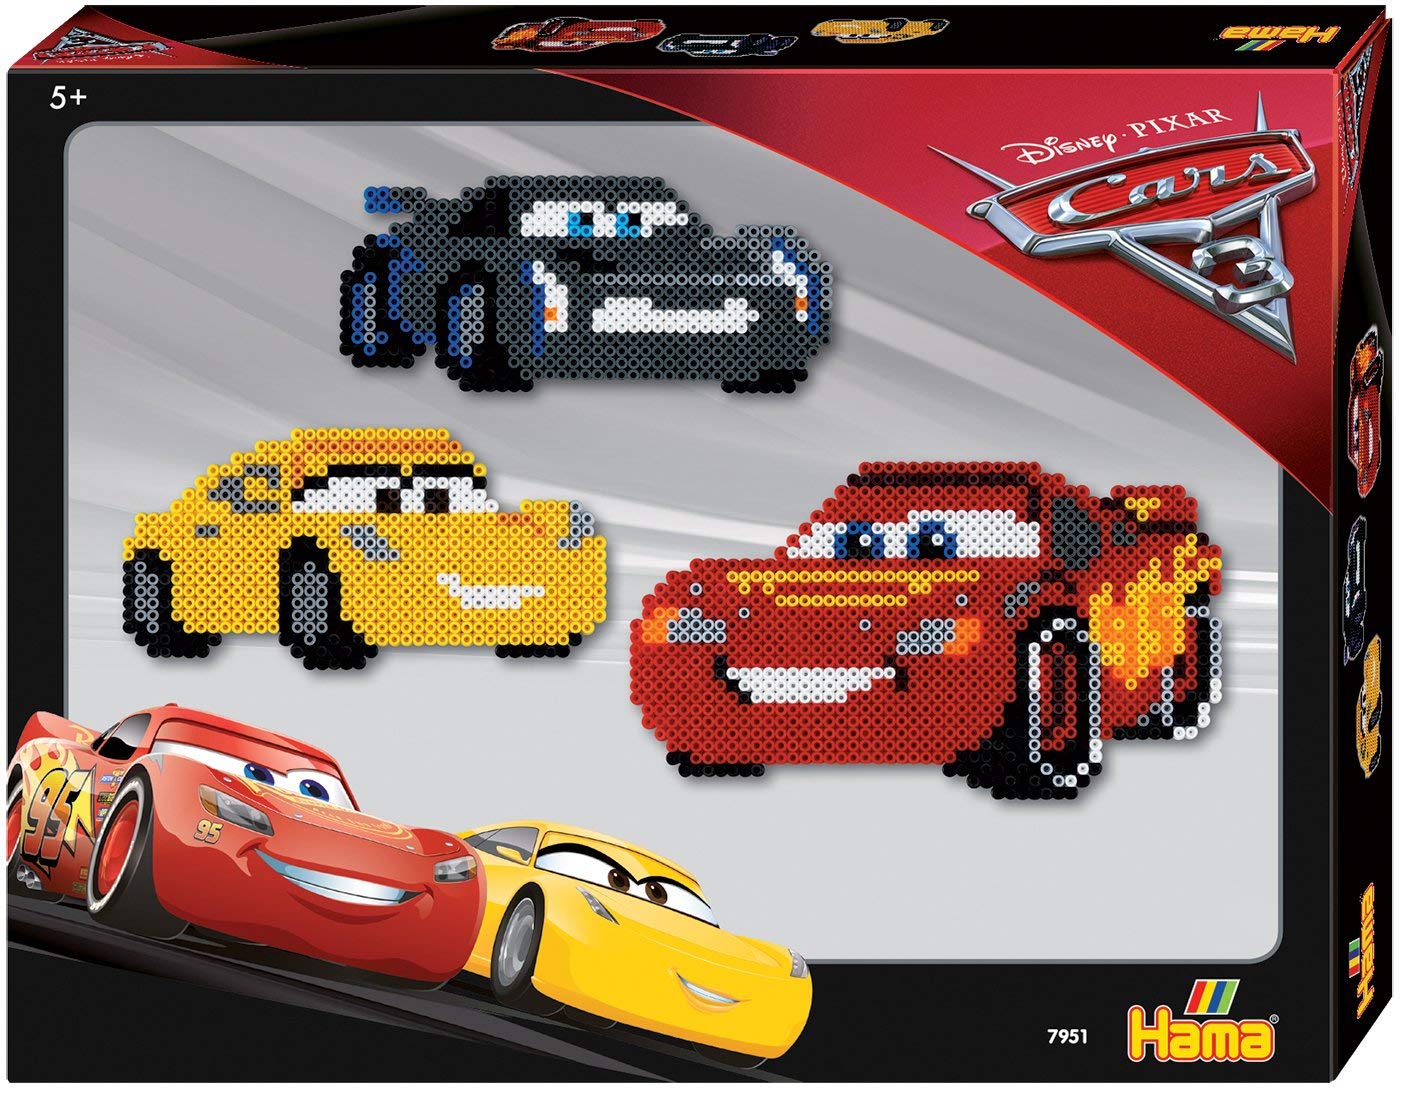 Hama 7951 - Geschenkpackung Disney Cars